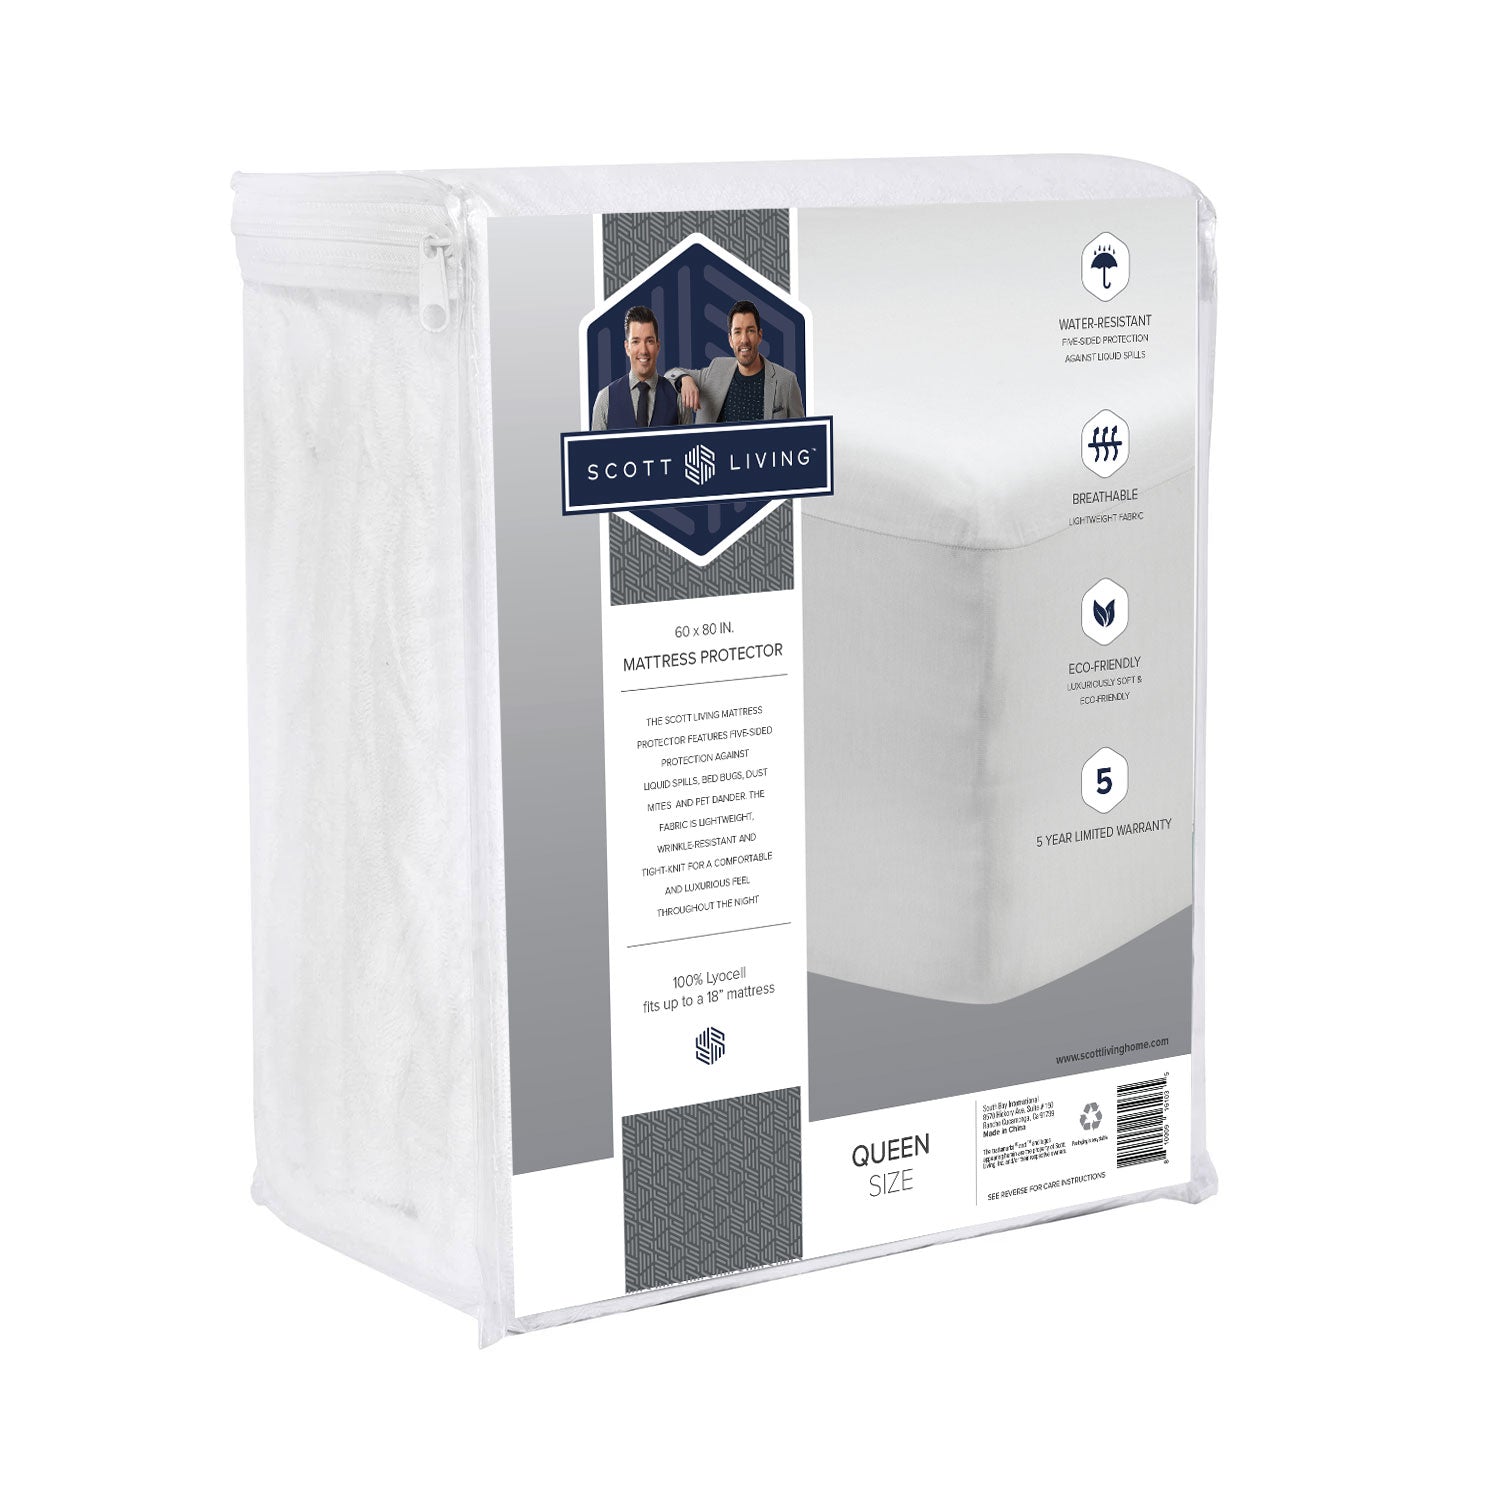 Scott Living Home - Premium 5-Sided Tencel Mattress Protector - 100% Waterproof and Hypoallergenic - BlissfulNights.com